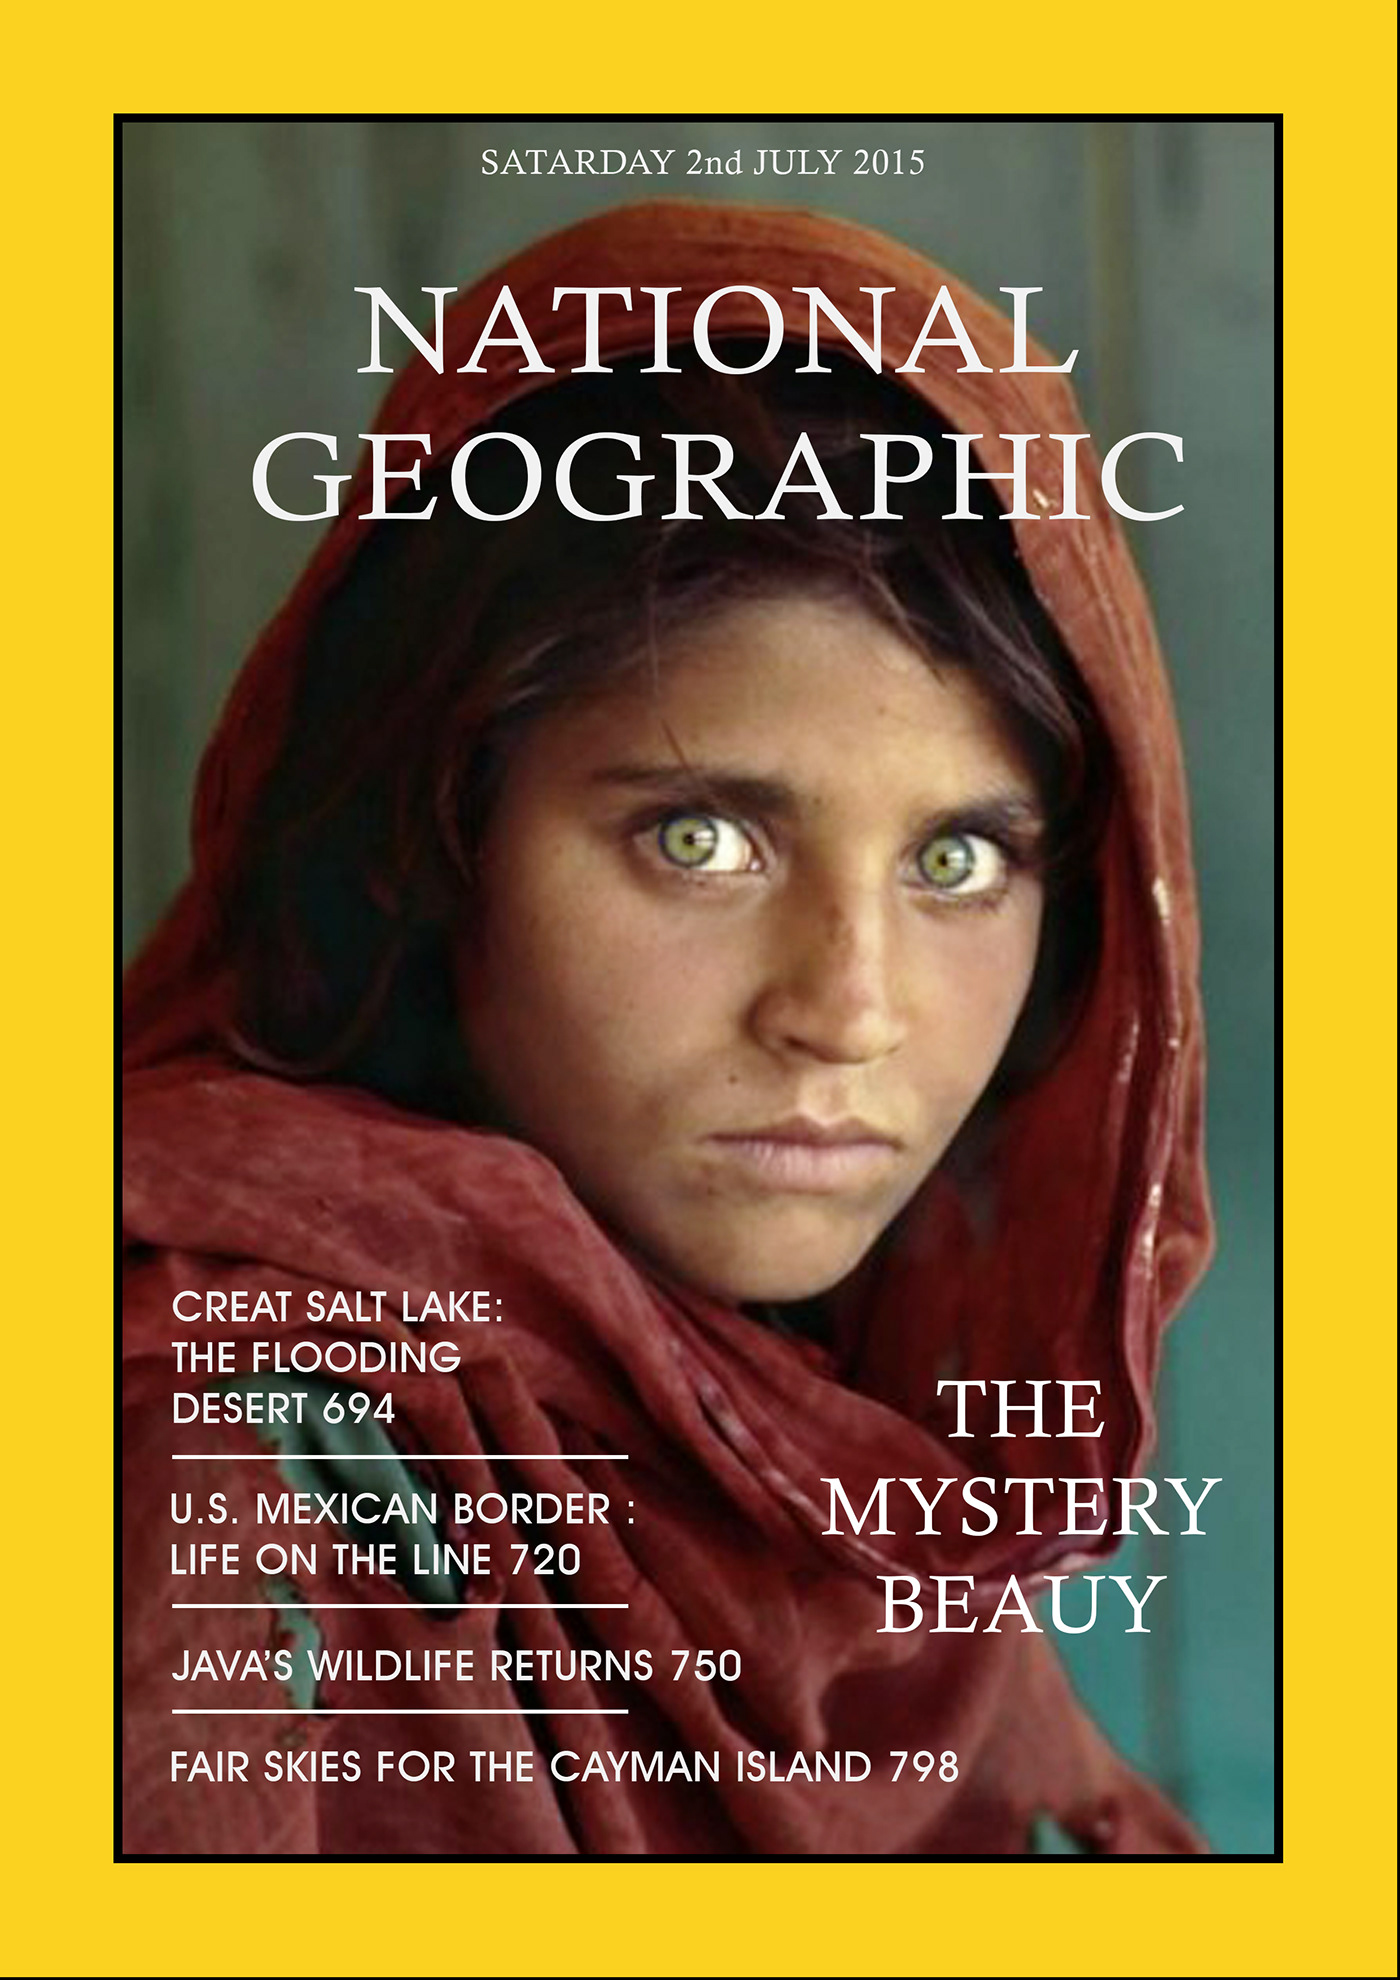 beauty magazine mystery national geographic